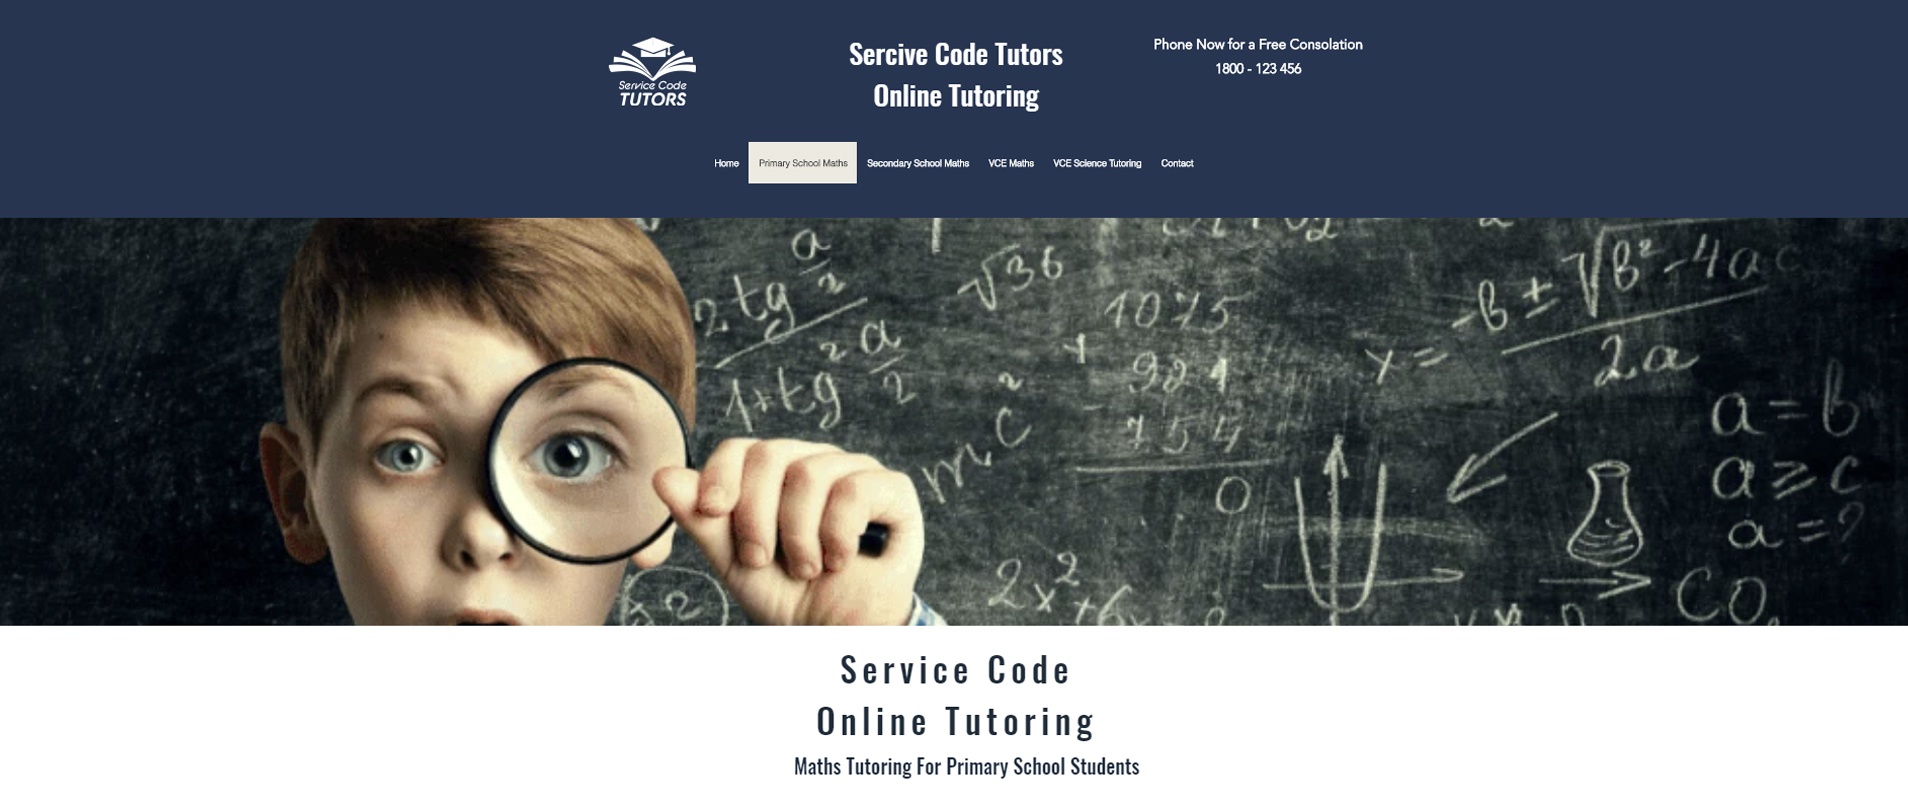 Service code tutors